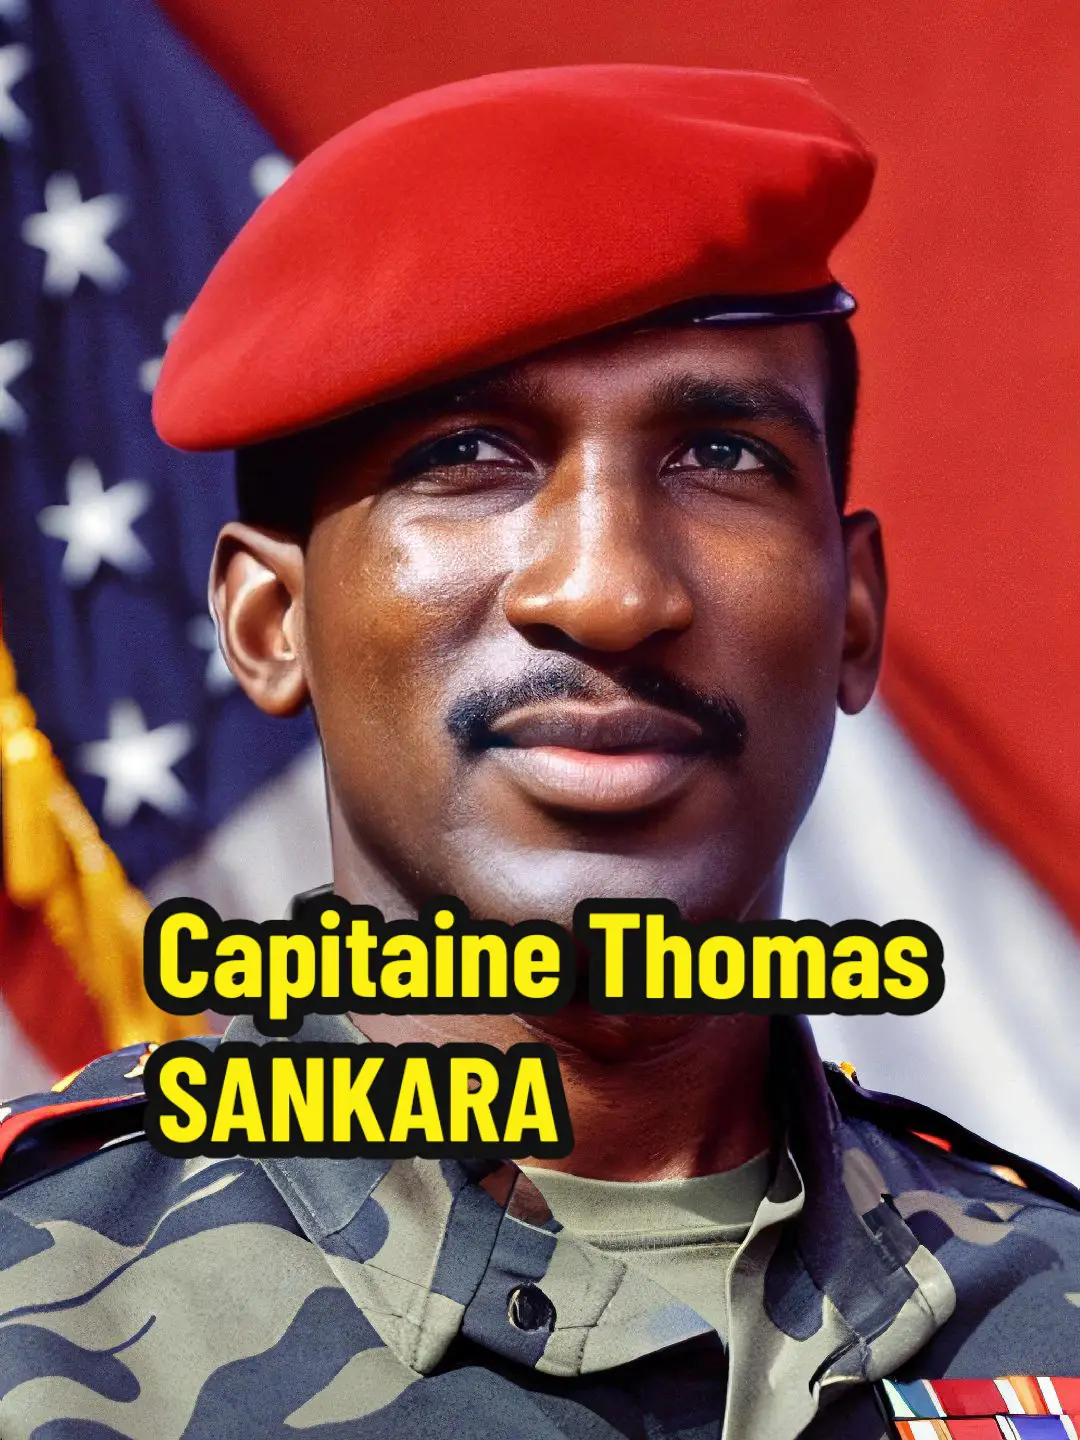 story du capitaine Thomas SANKARA#burkinafaso #afrique #burkinatiktok2024 #reconquetetv #afriq2024 #burkinatiktok🇧🇫 #photomagic #thomassankara 